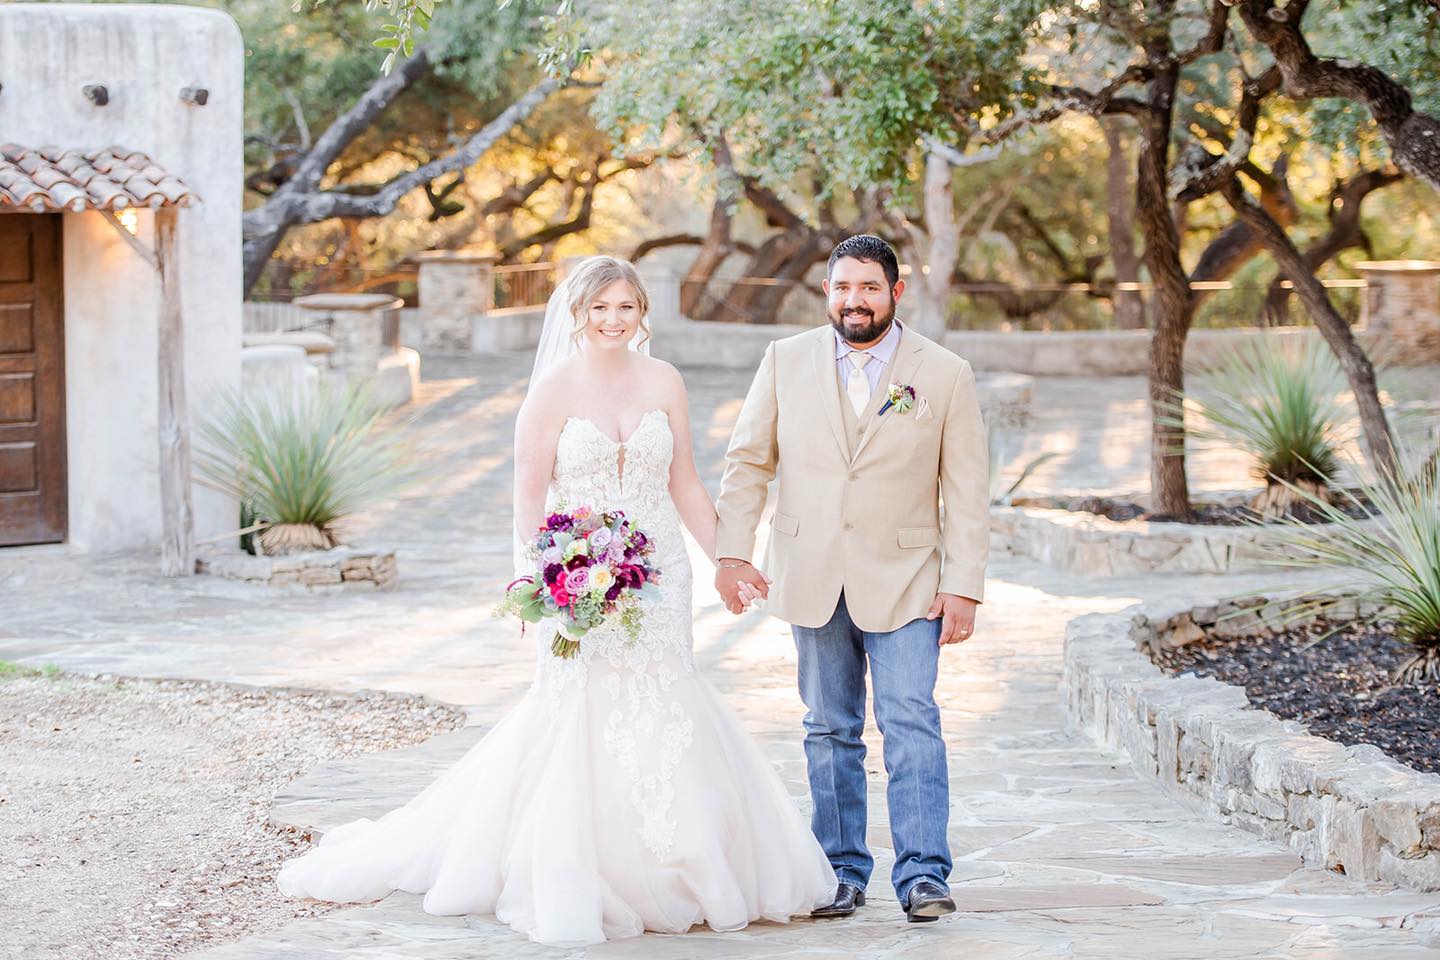 Lesley's Flowers-BridalBuzz-San Antonio Weddings- Lost Mission